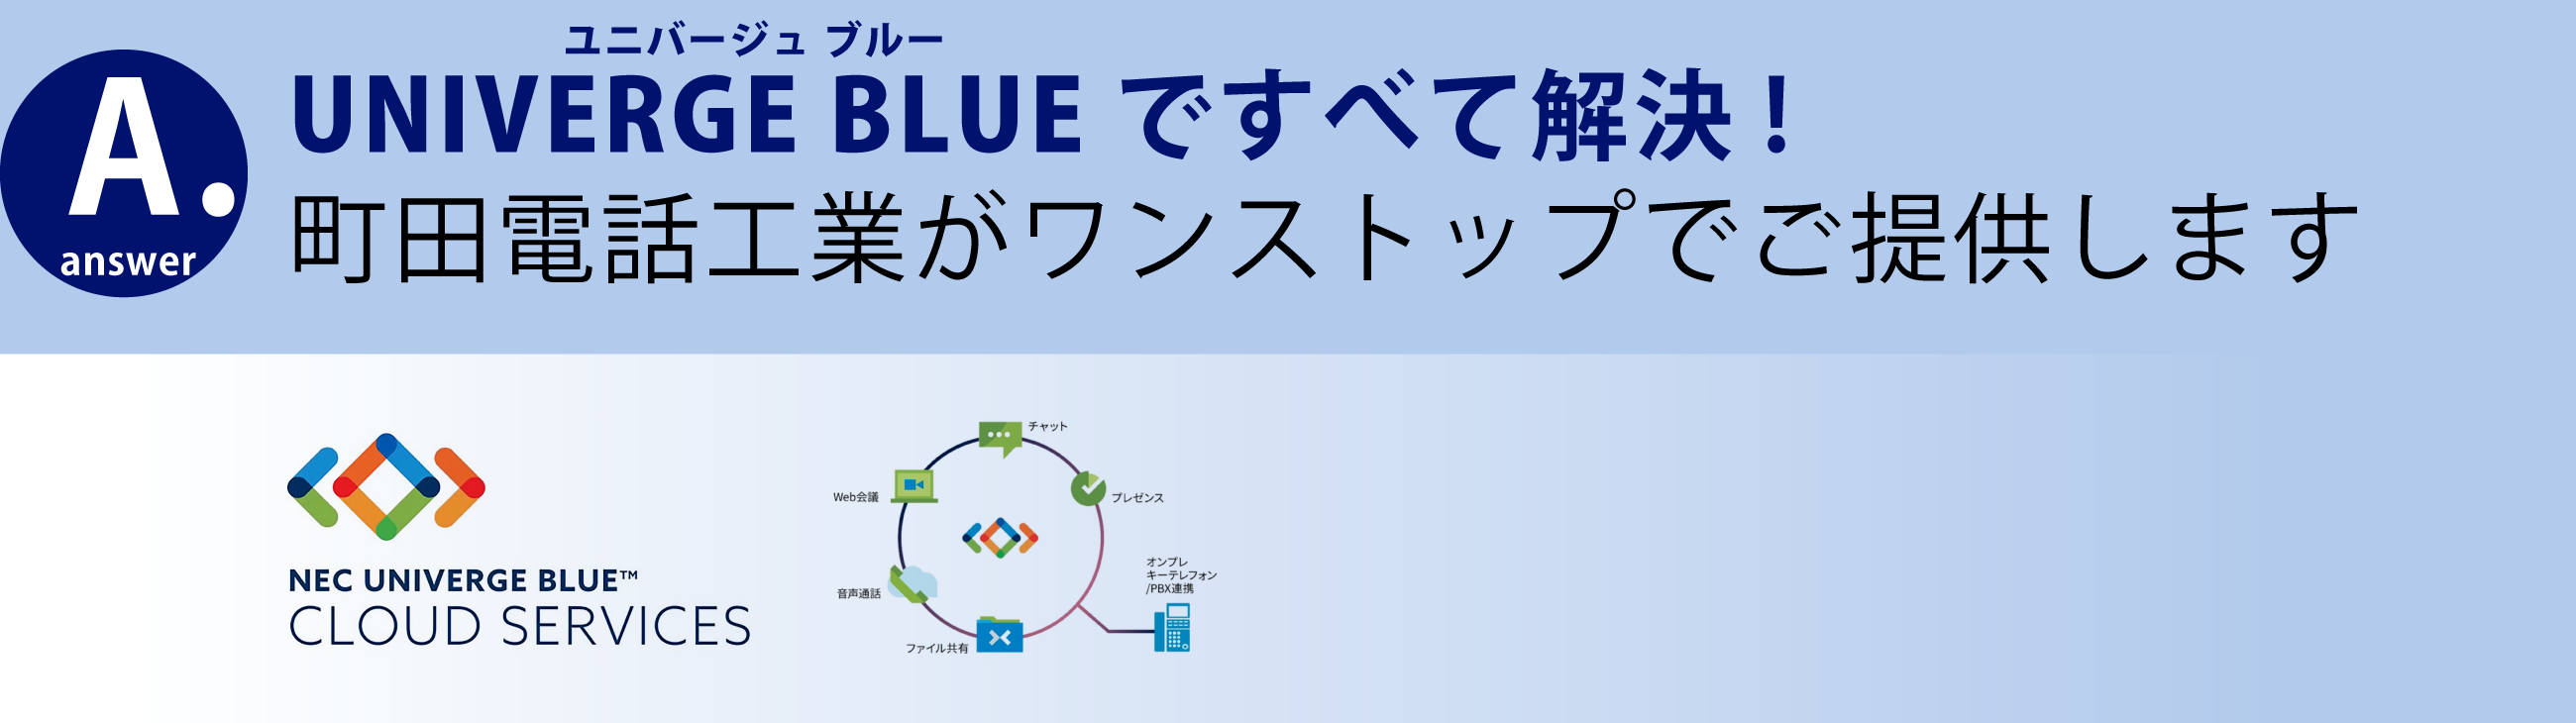 UNIVERGE BLUEですべて解決! 町田電話工業がワンストップでご提供します